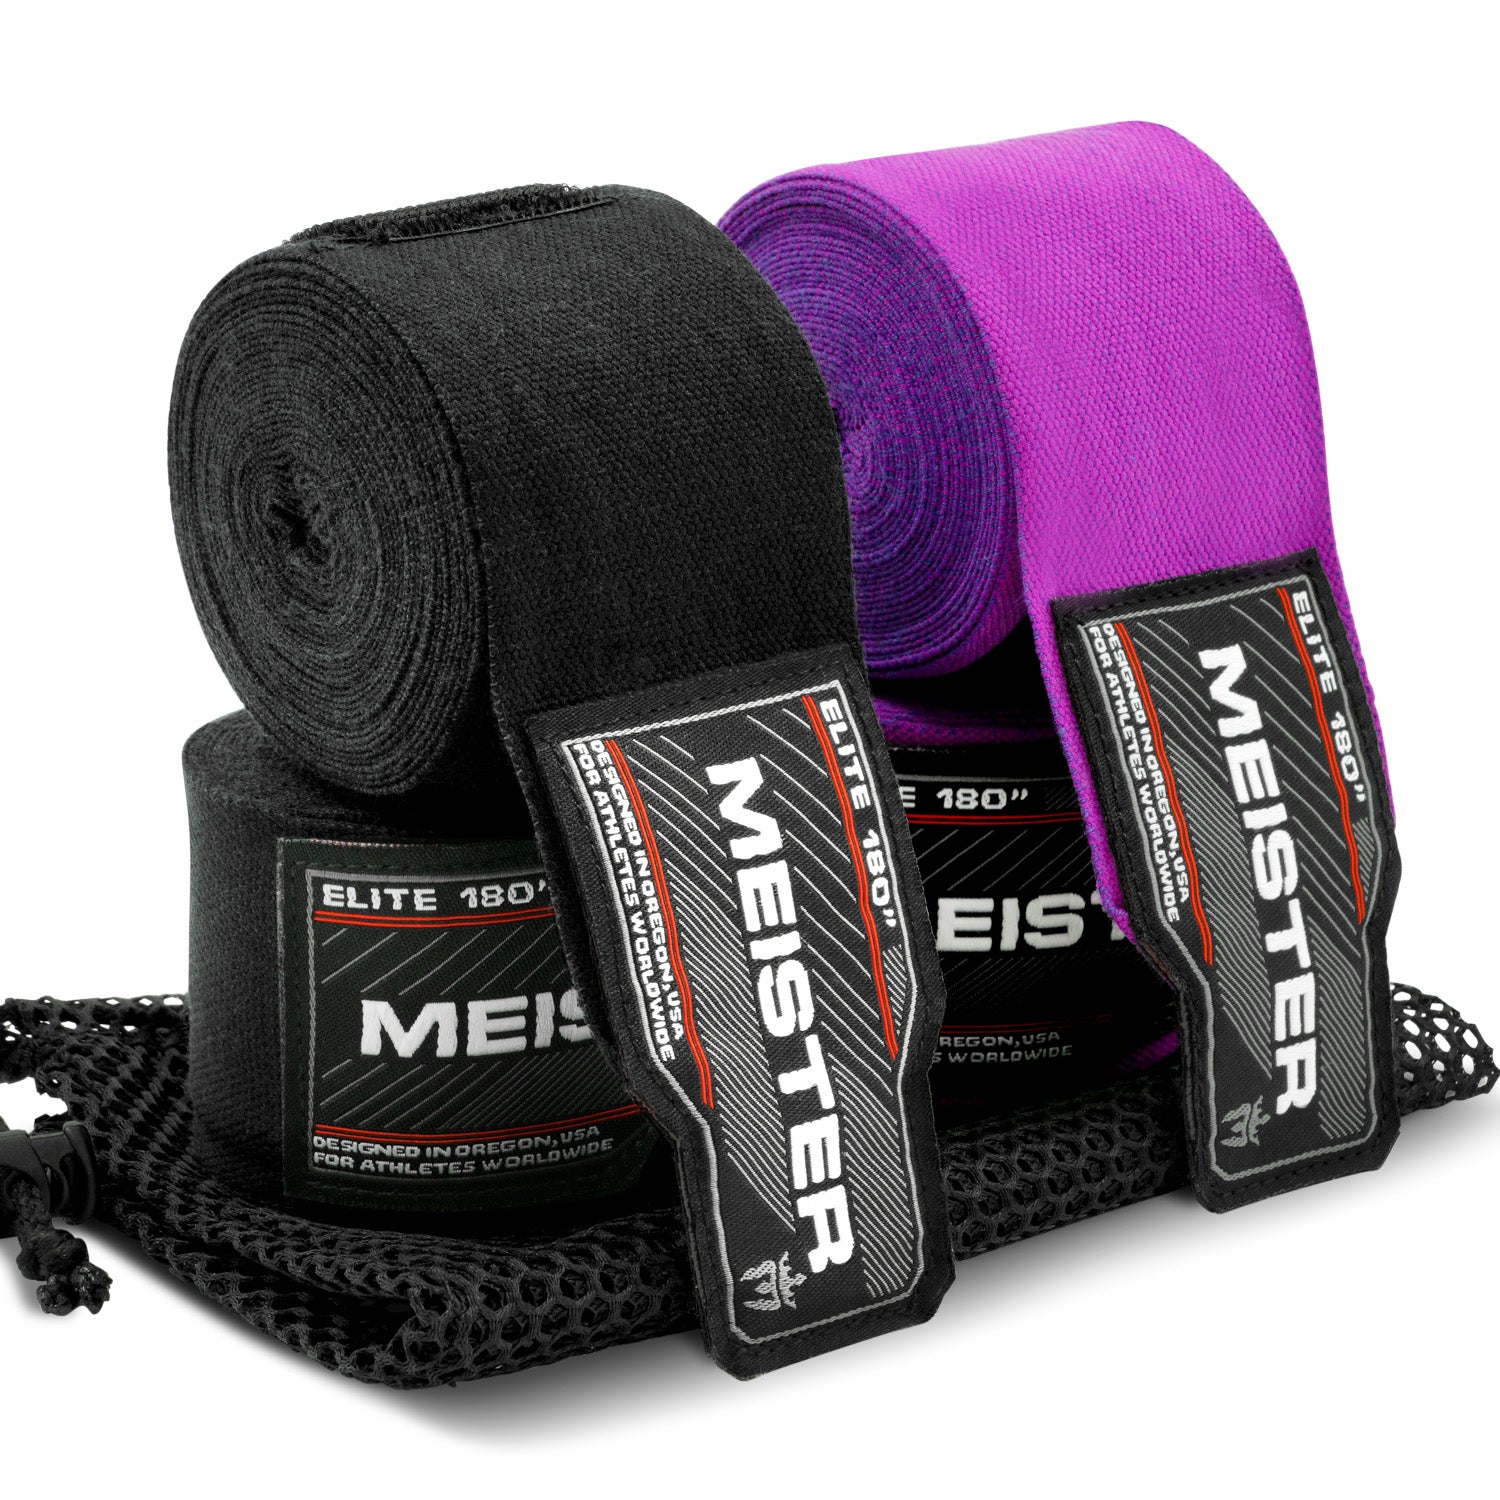 Meister ELITE 180" Elastic Hand Wraps - 2 Pack - Black / Purple